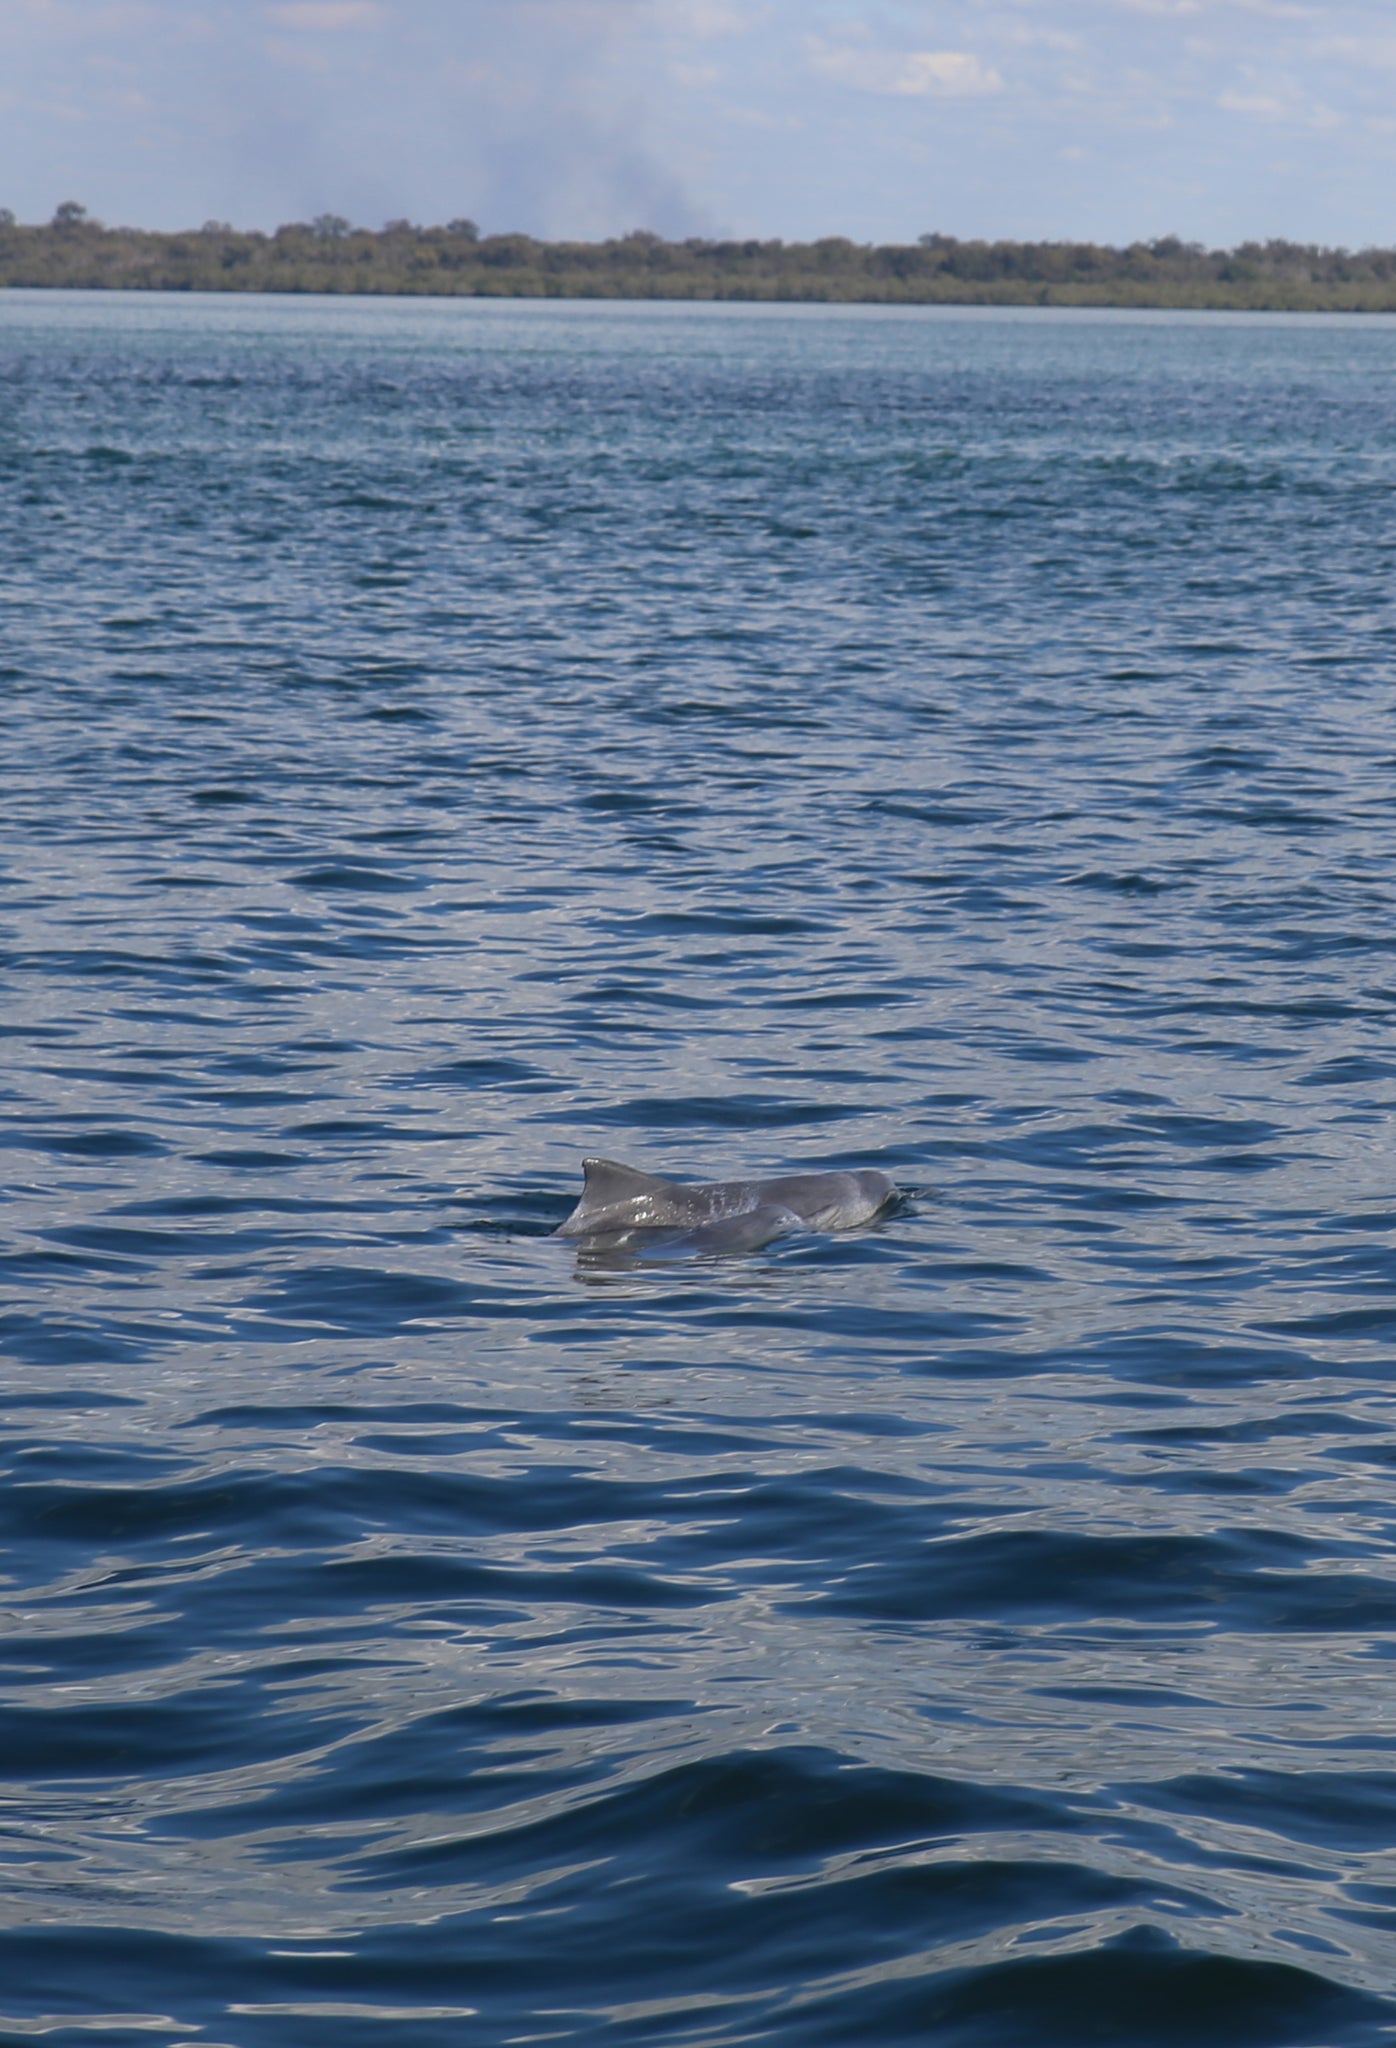 Fraser Island dolphins